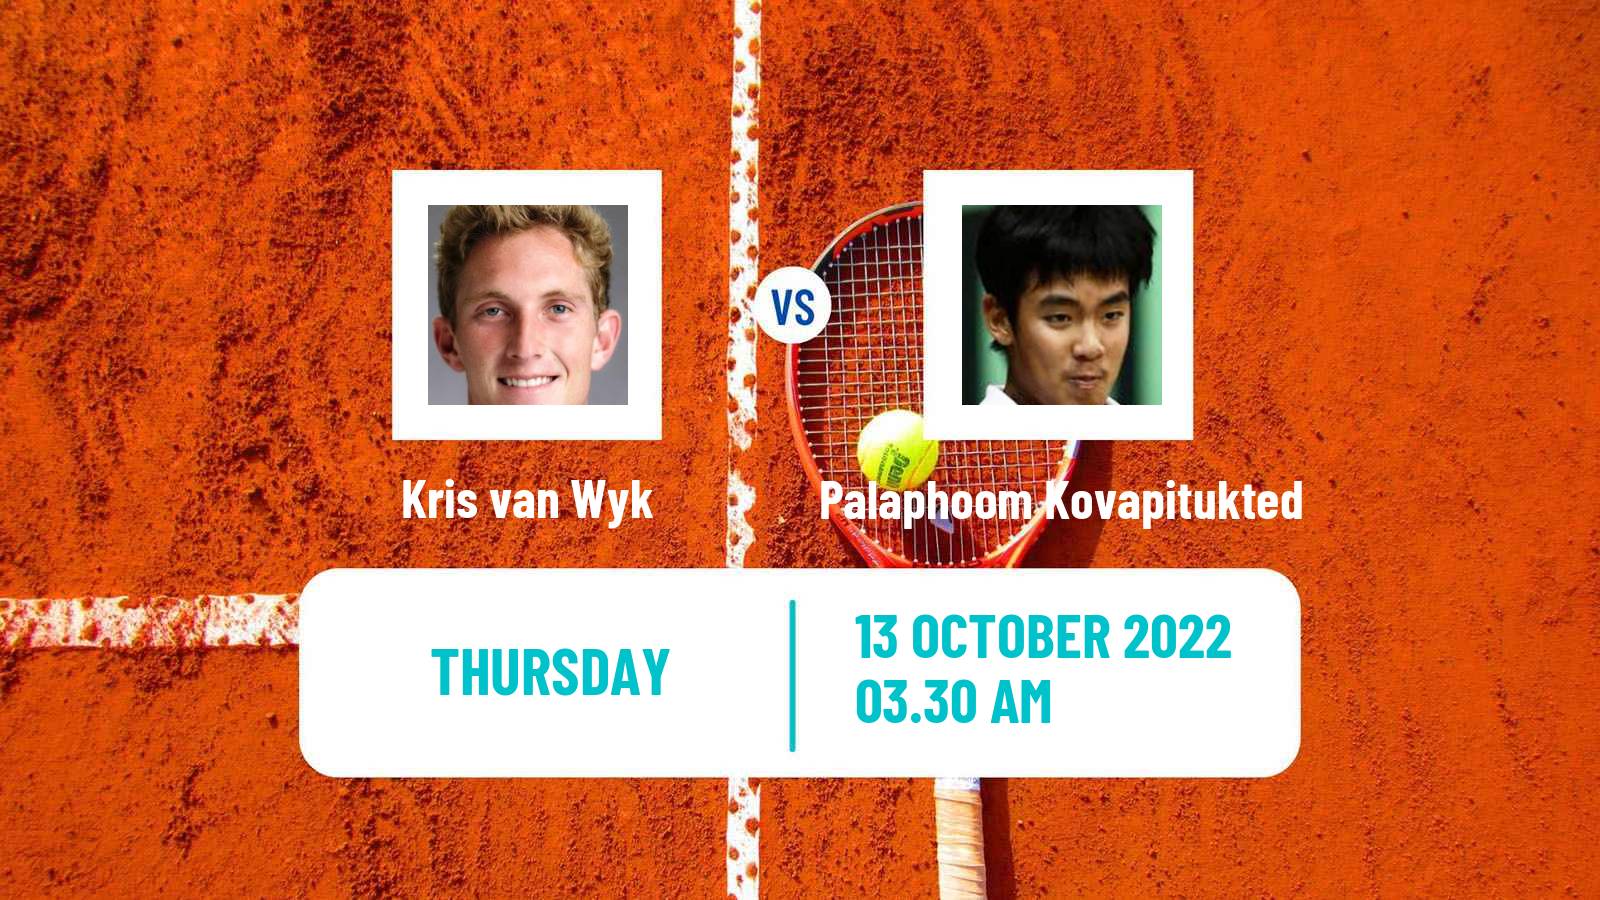 Tennis ITF Tournaments Kris van Wyk - Palaphoom Kovapitukted